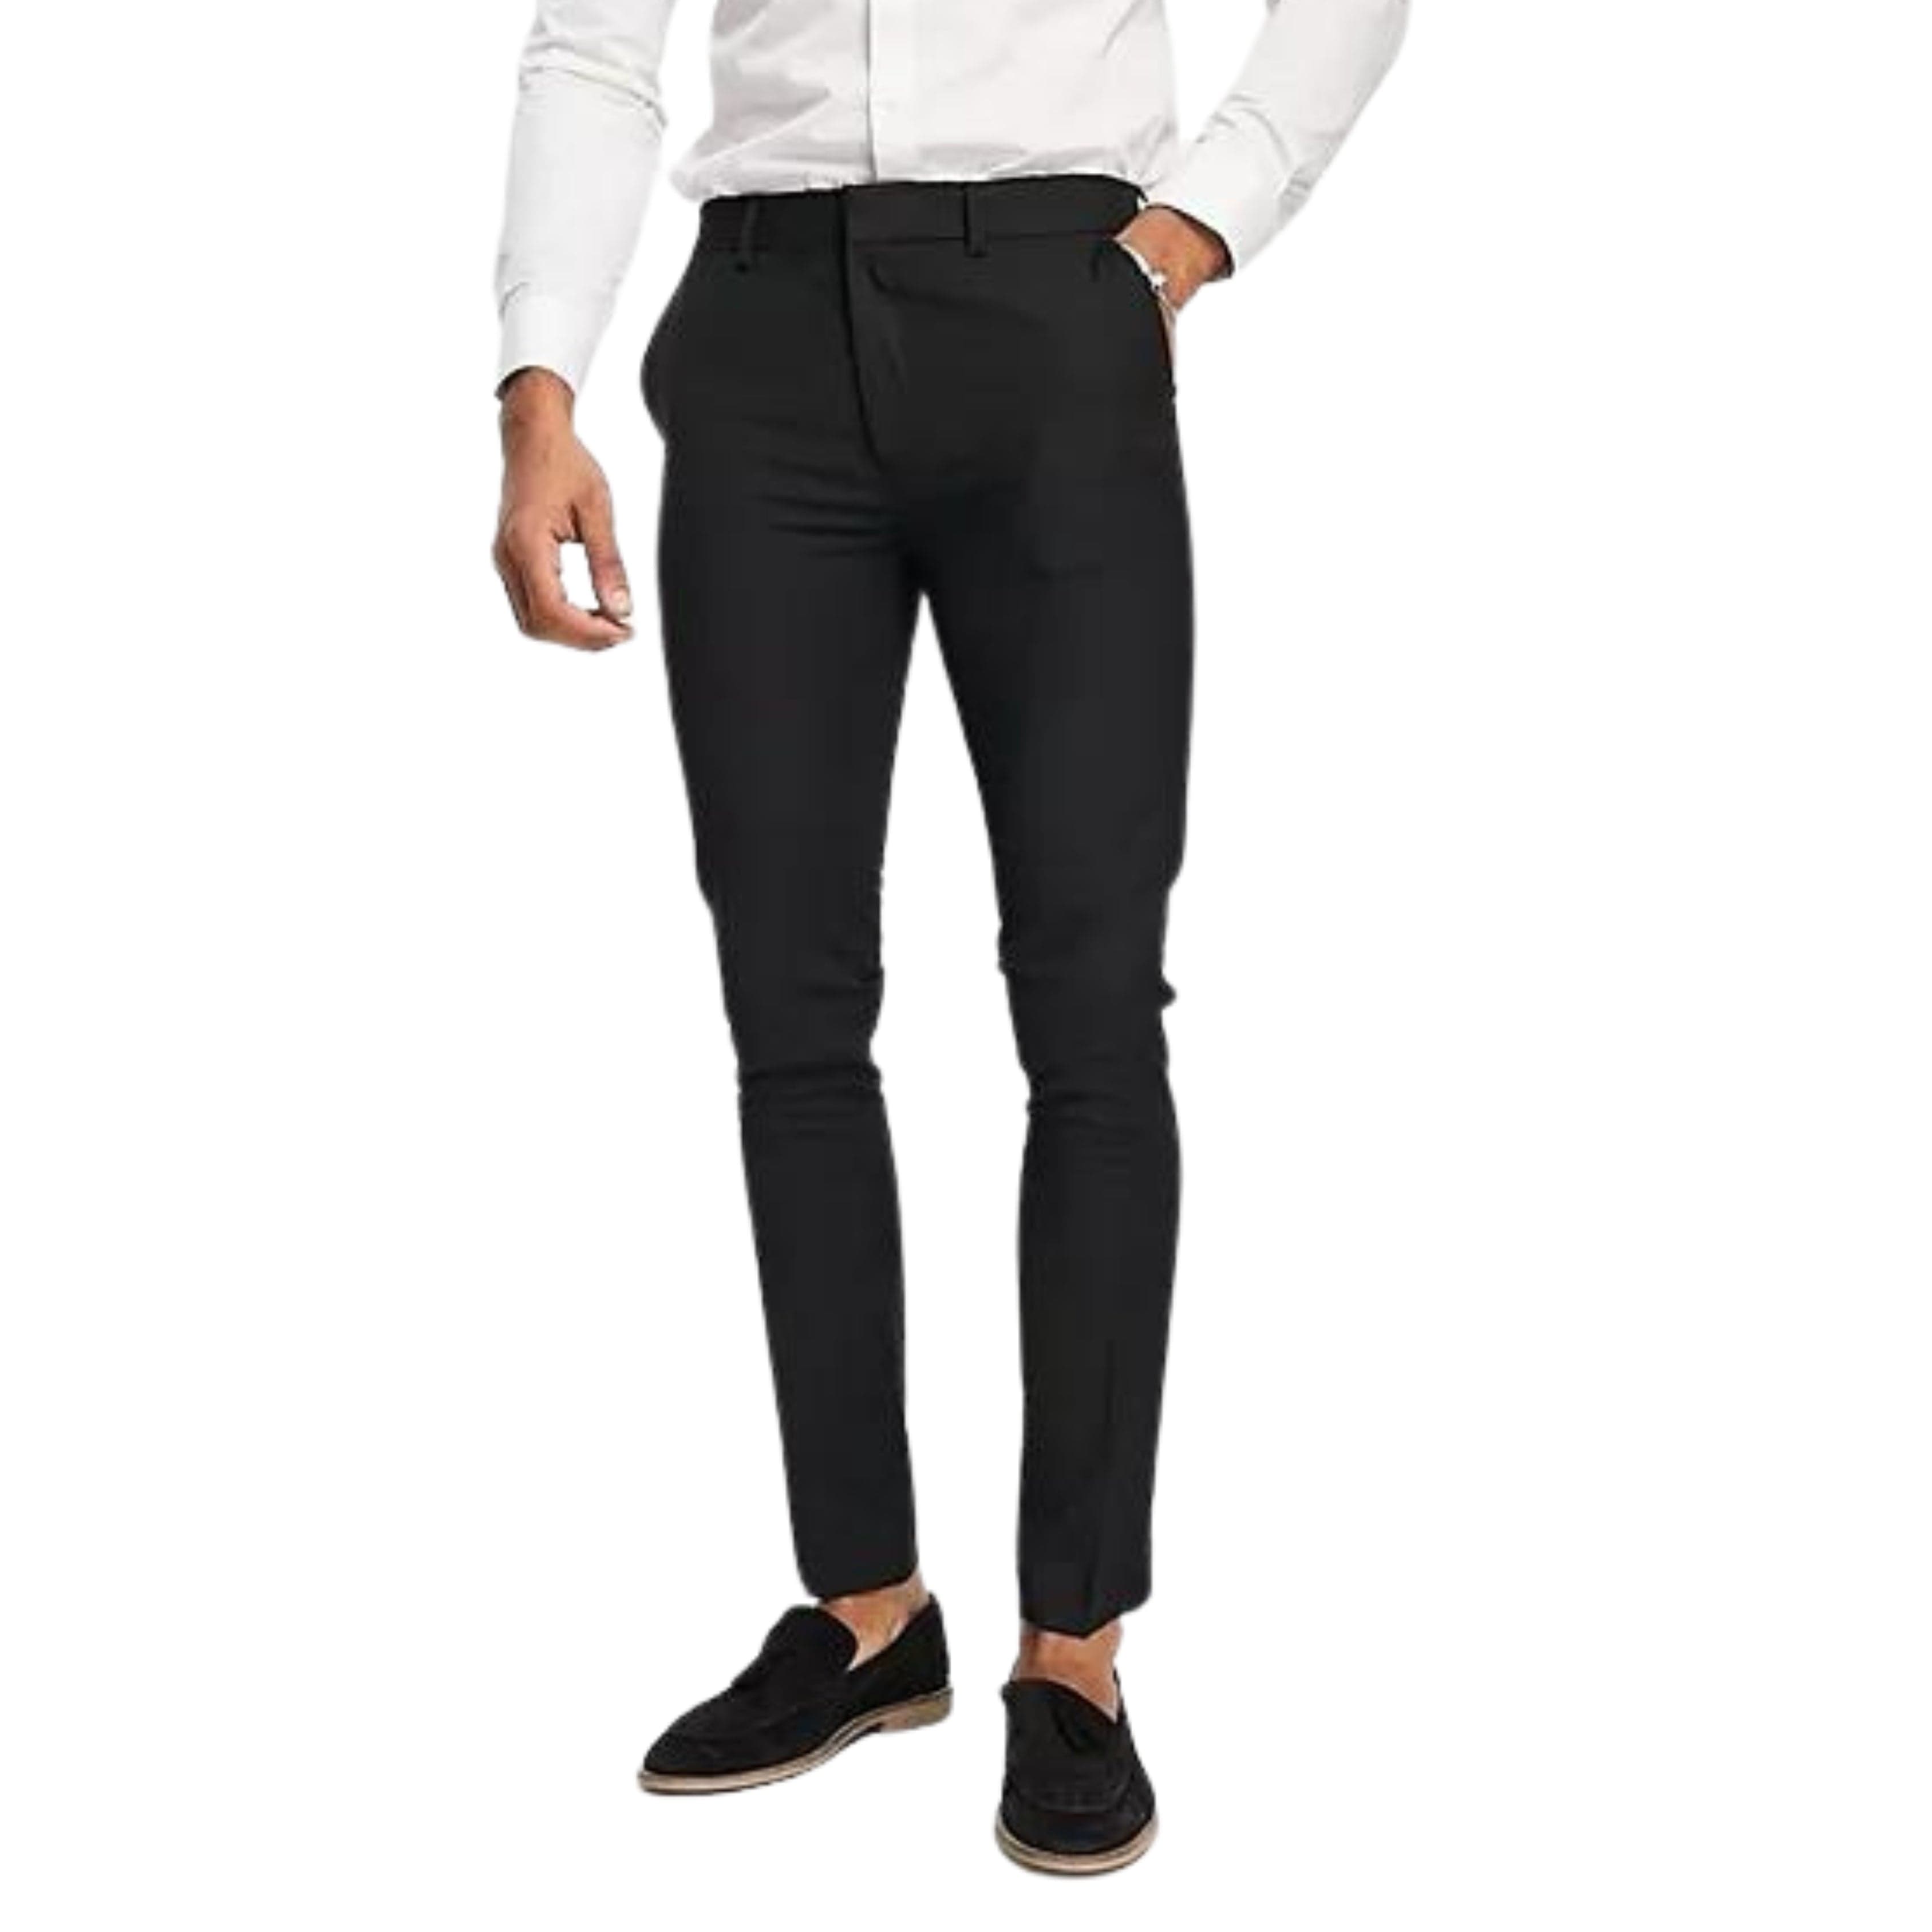 Buy Topman Smart Trousers With Elastic Waistband Online | ZALORA Malaysia